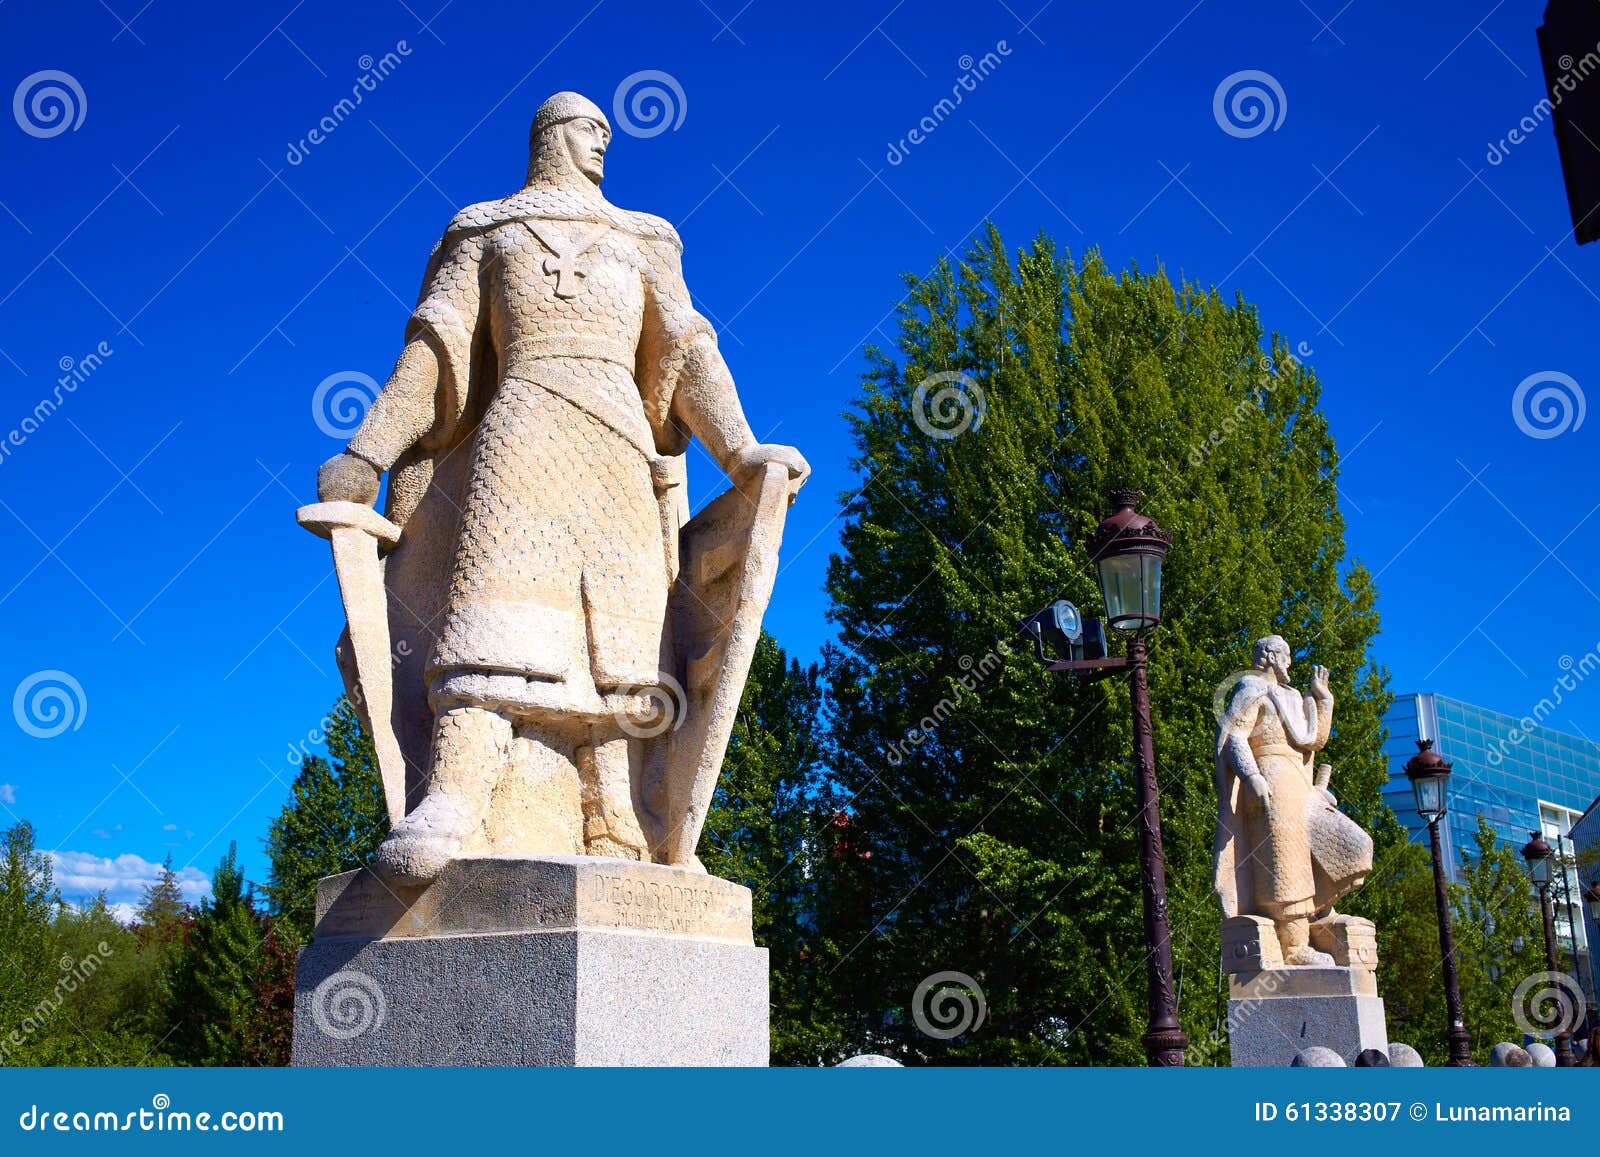 burgos san pablo bridge statues on arlanzon river